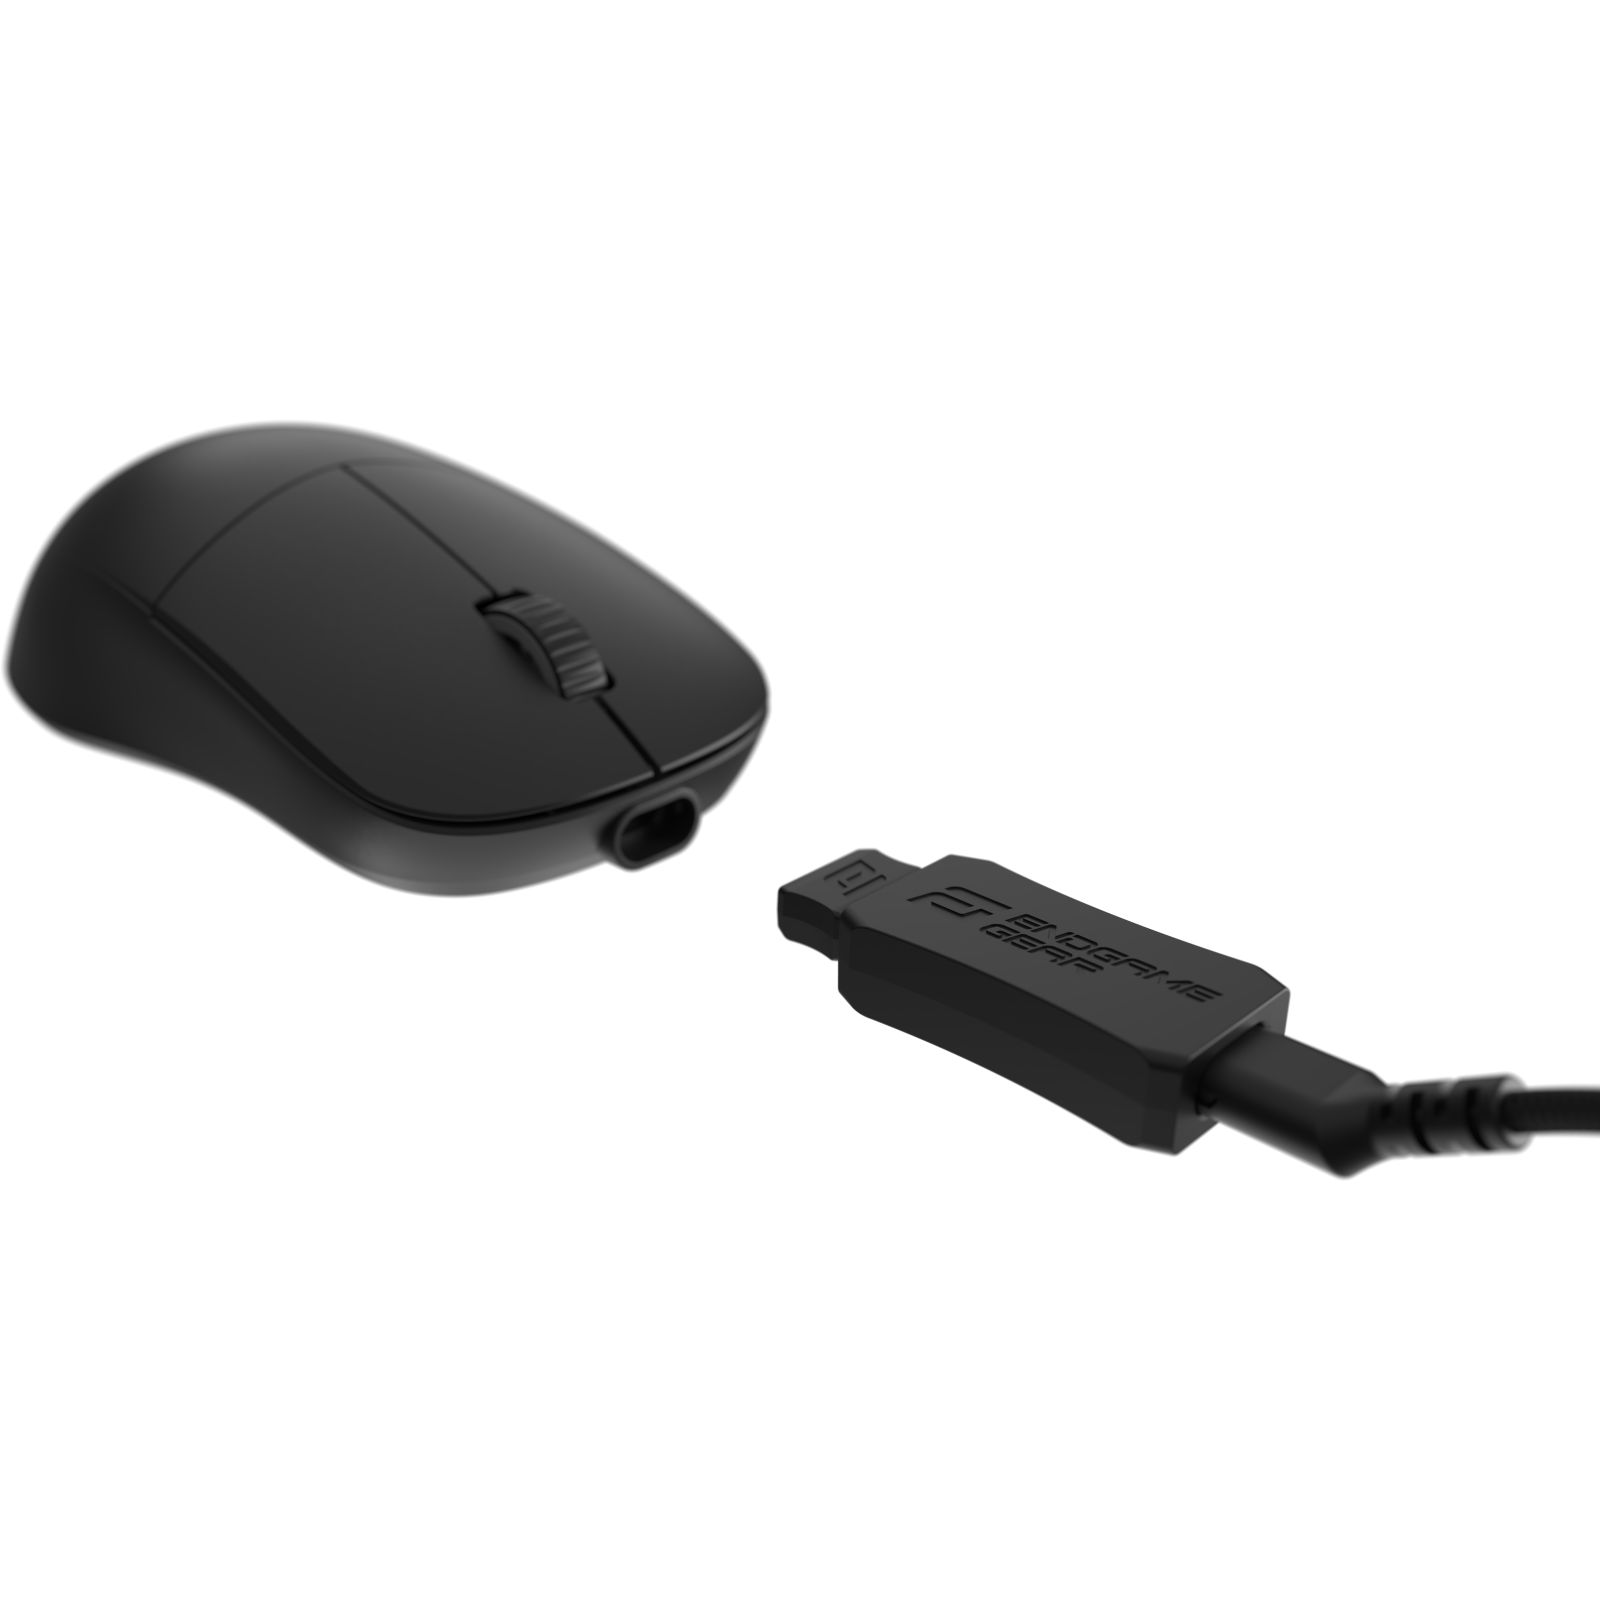 Endgame Gear XM2we Gaming Mouse Black